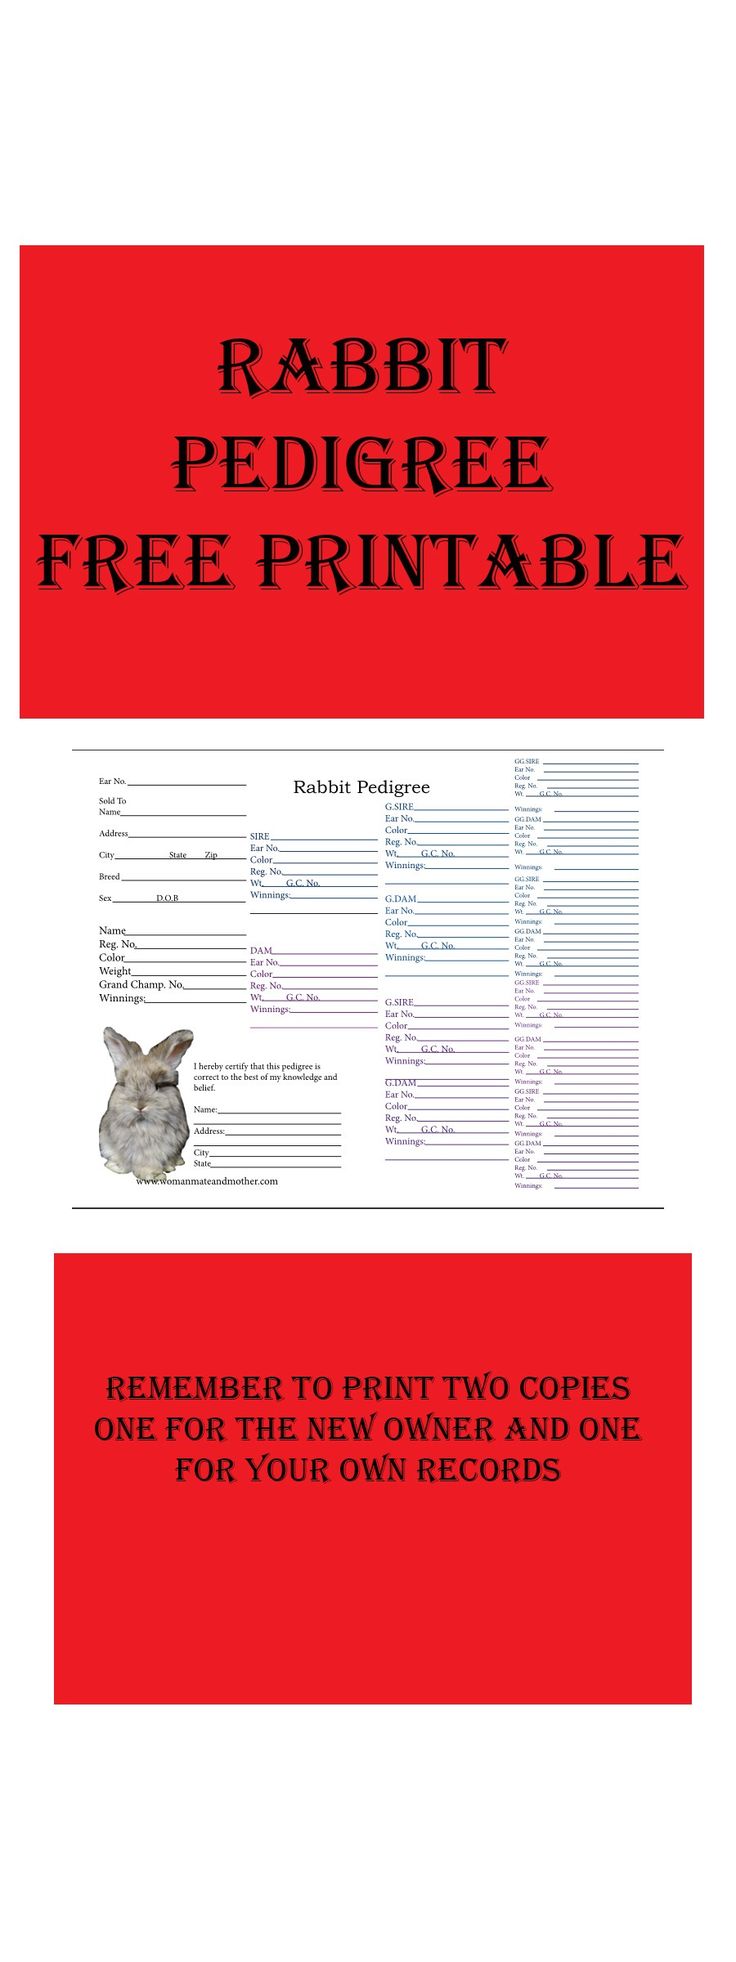 free rabbit pedigree downloads